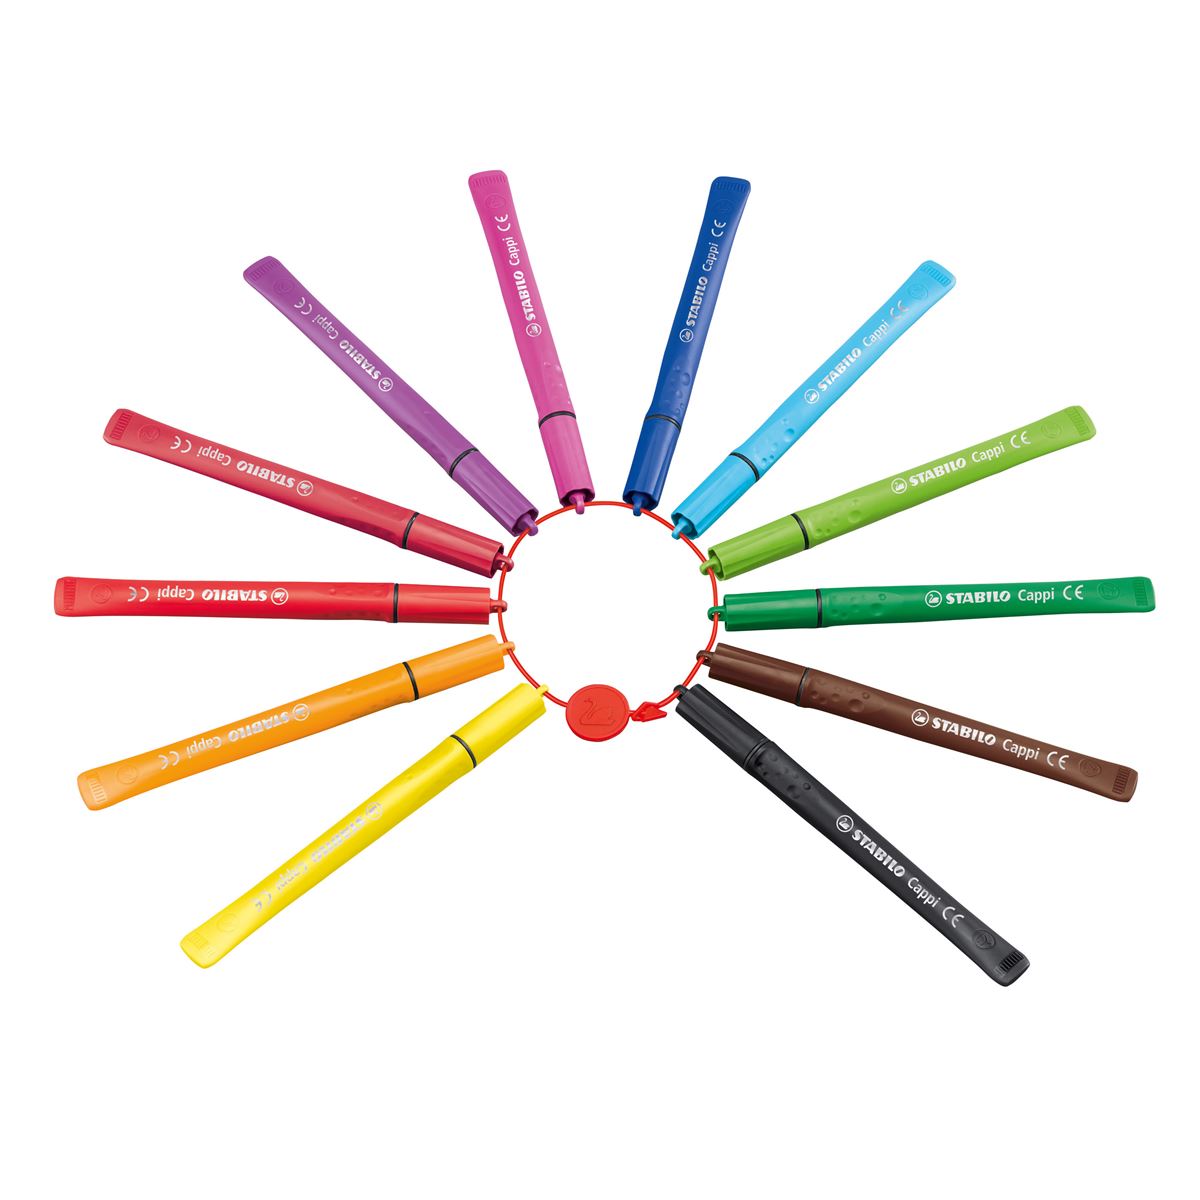 STABILO Cappi Colouring Pens - Set of 12 Felt Tips